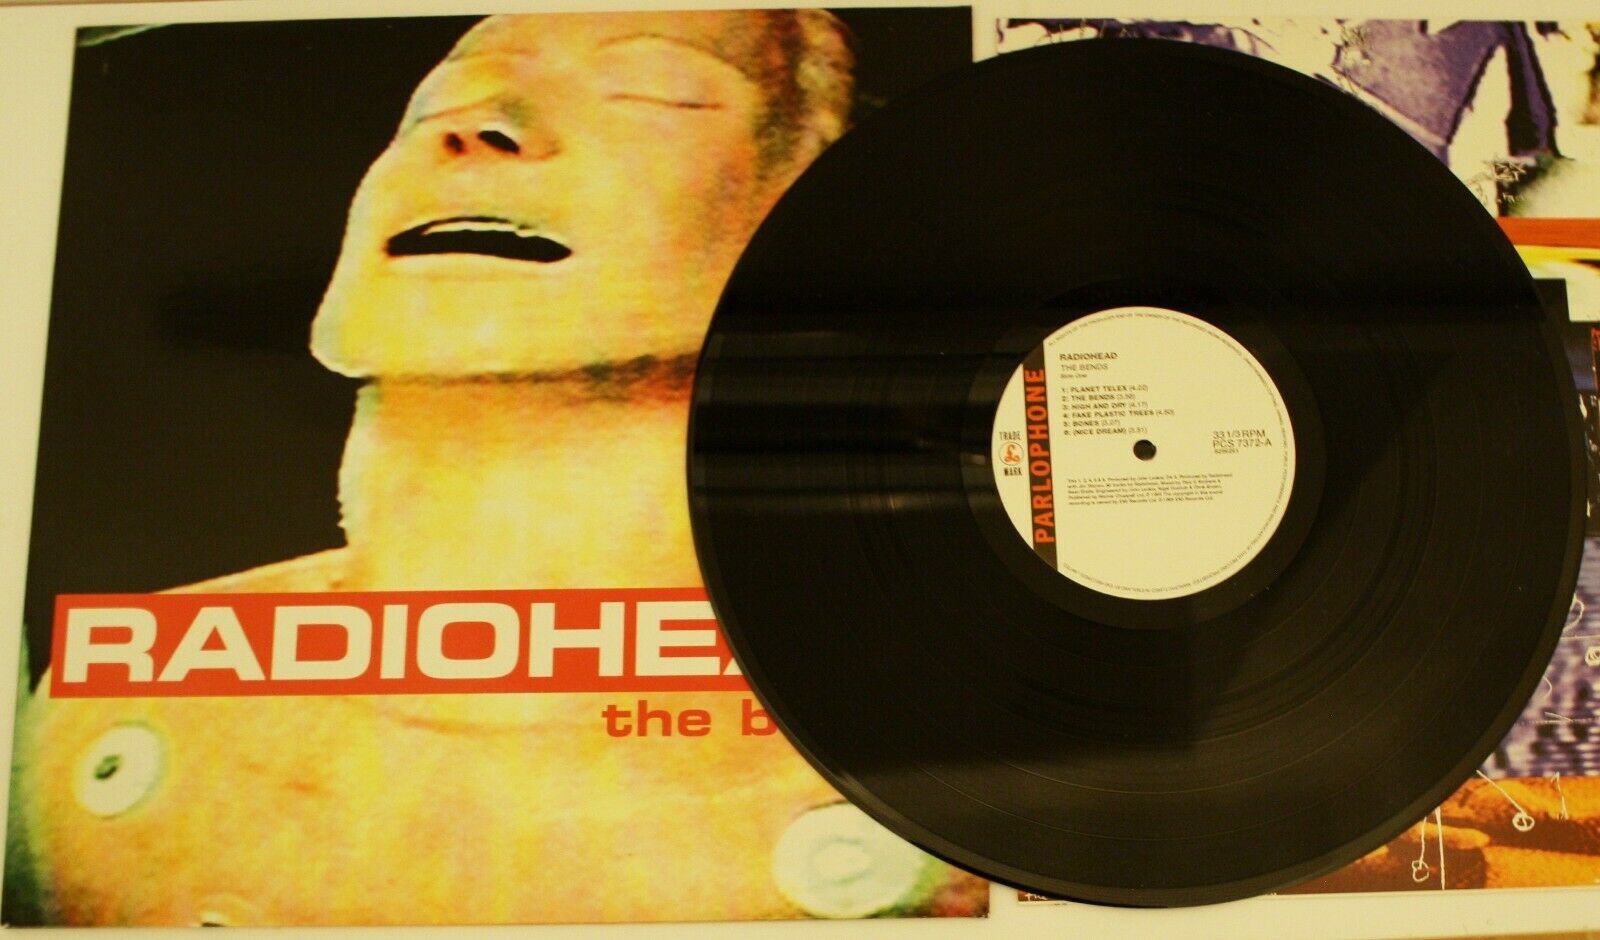 The Bends - Radiohead - Vinyle album - Achat & prix